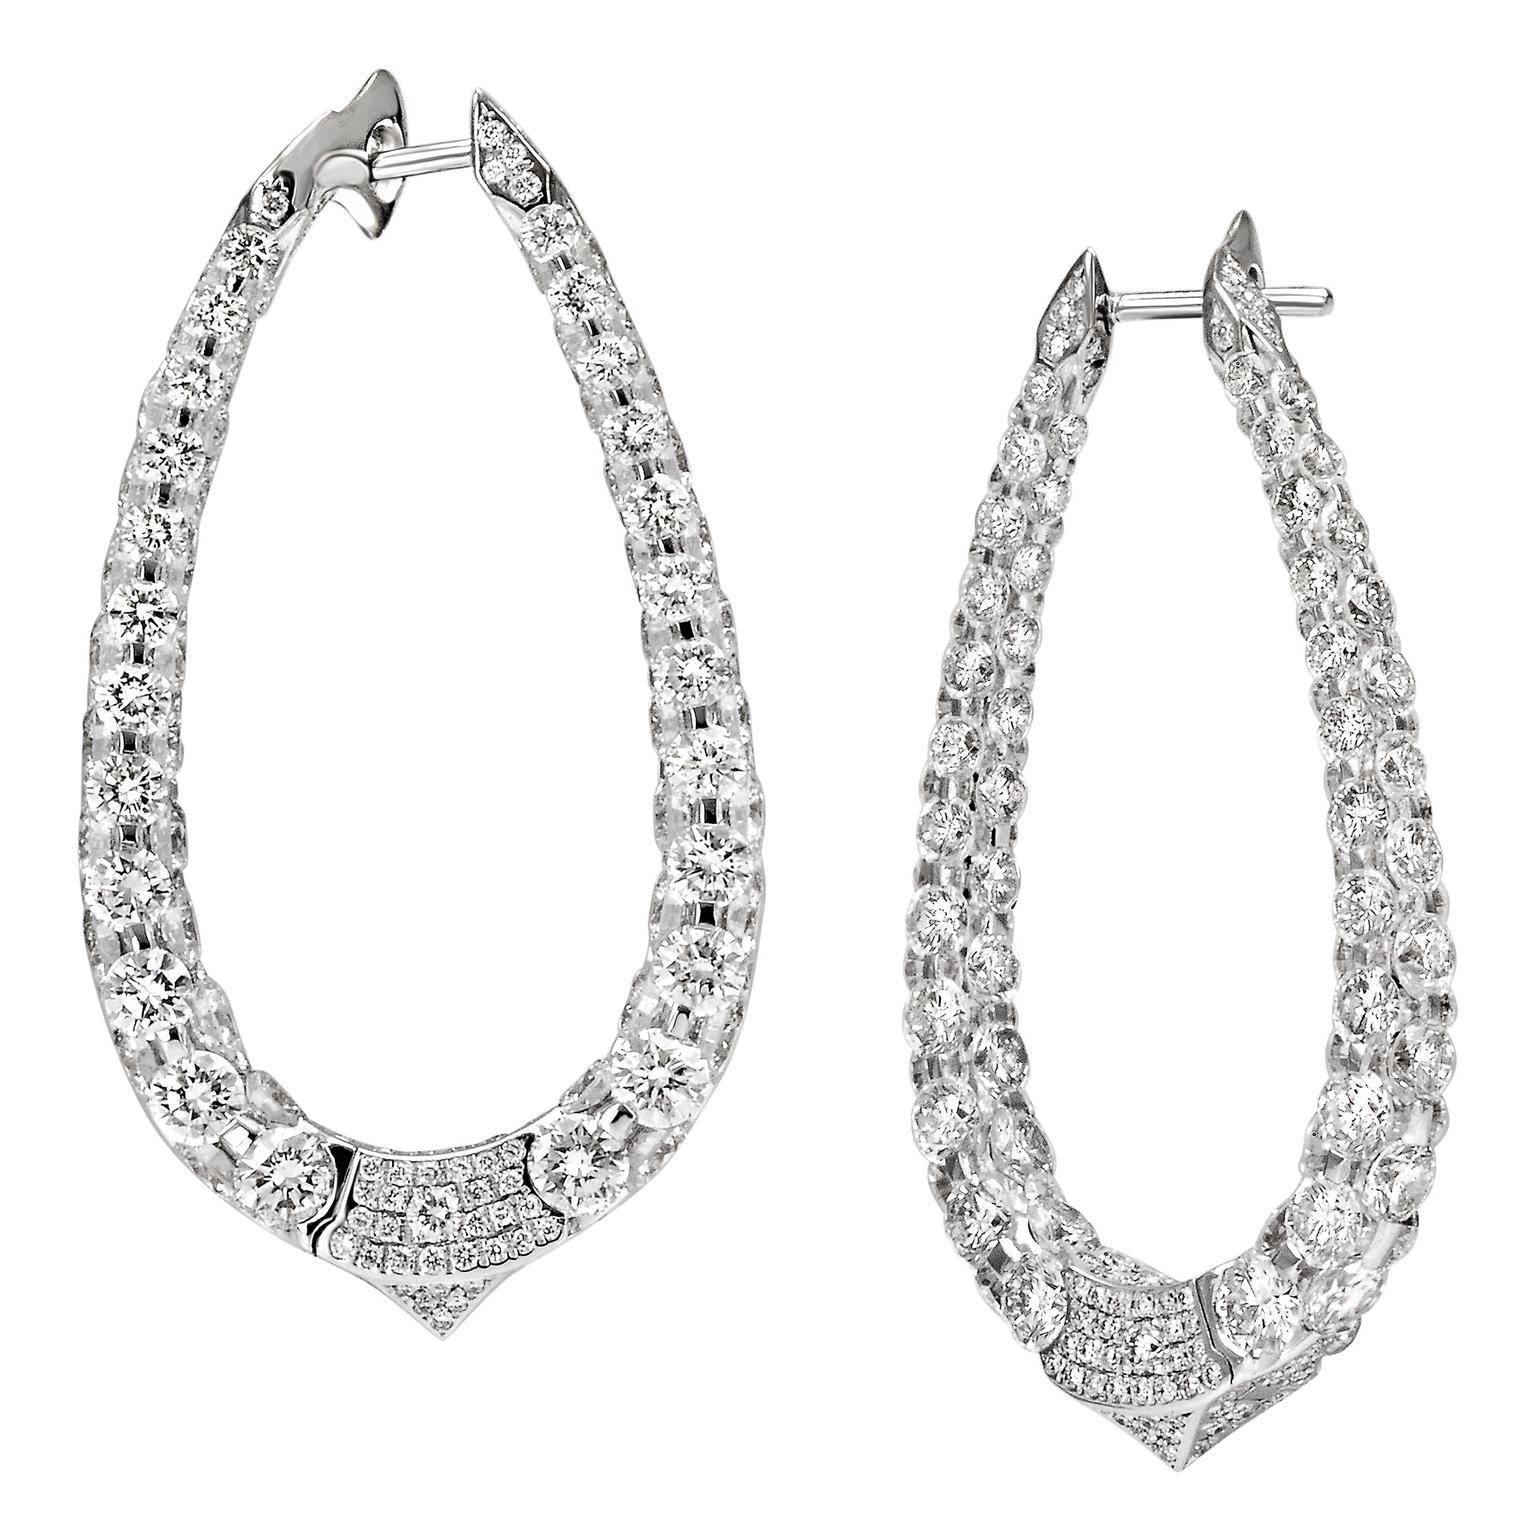 Boghossian Les Merveilles Creole hoop diamond earrings